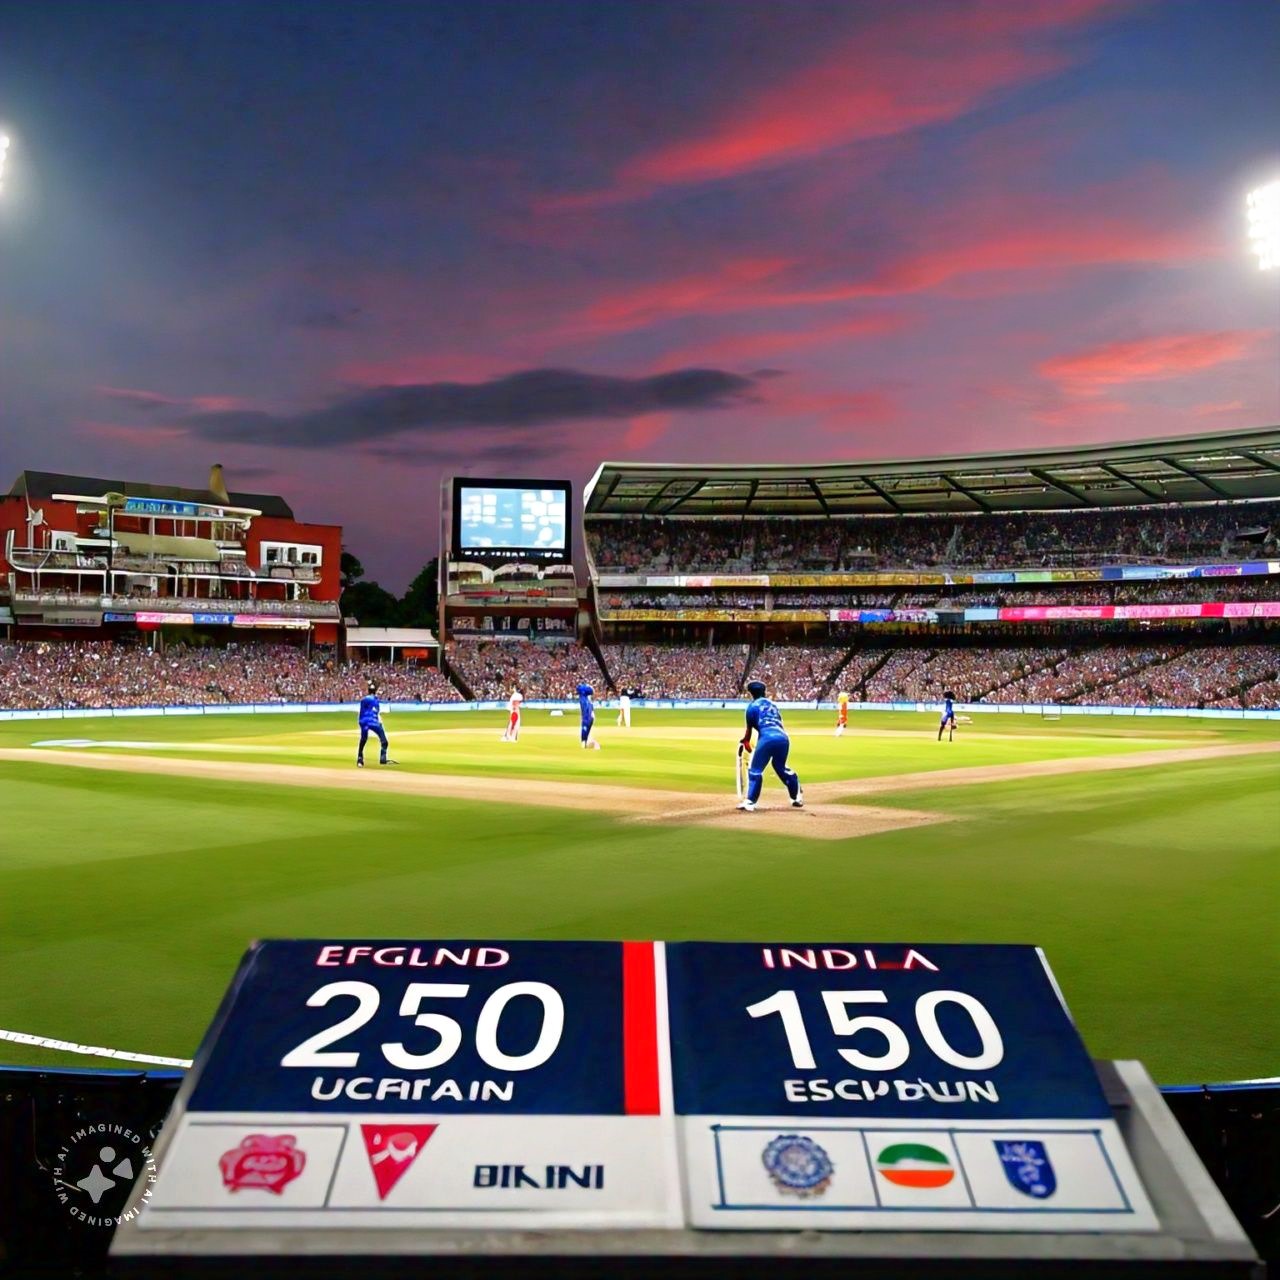 england cricket team vs india national cricket team match scorecard